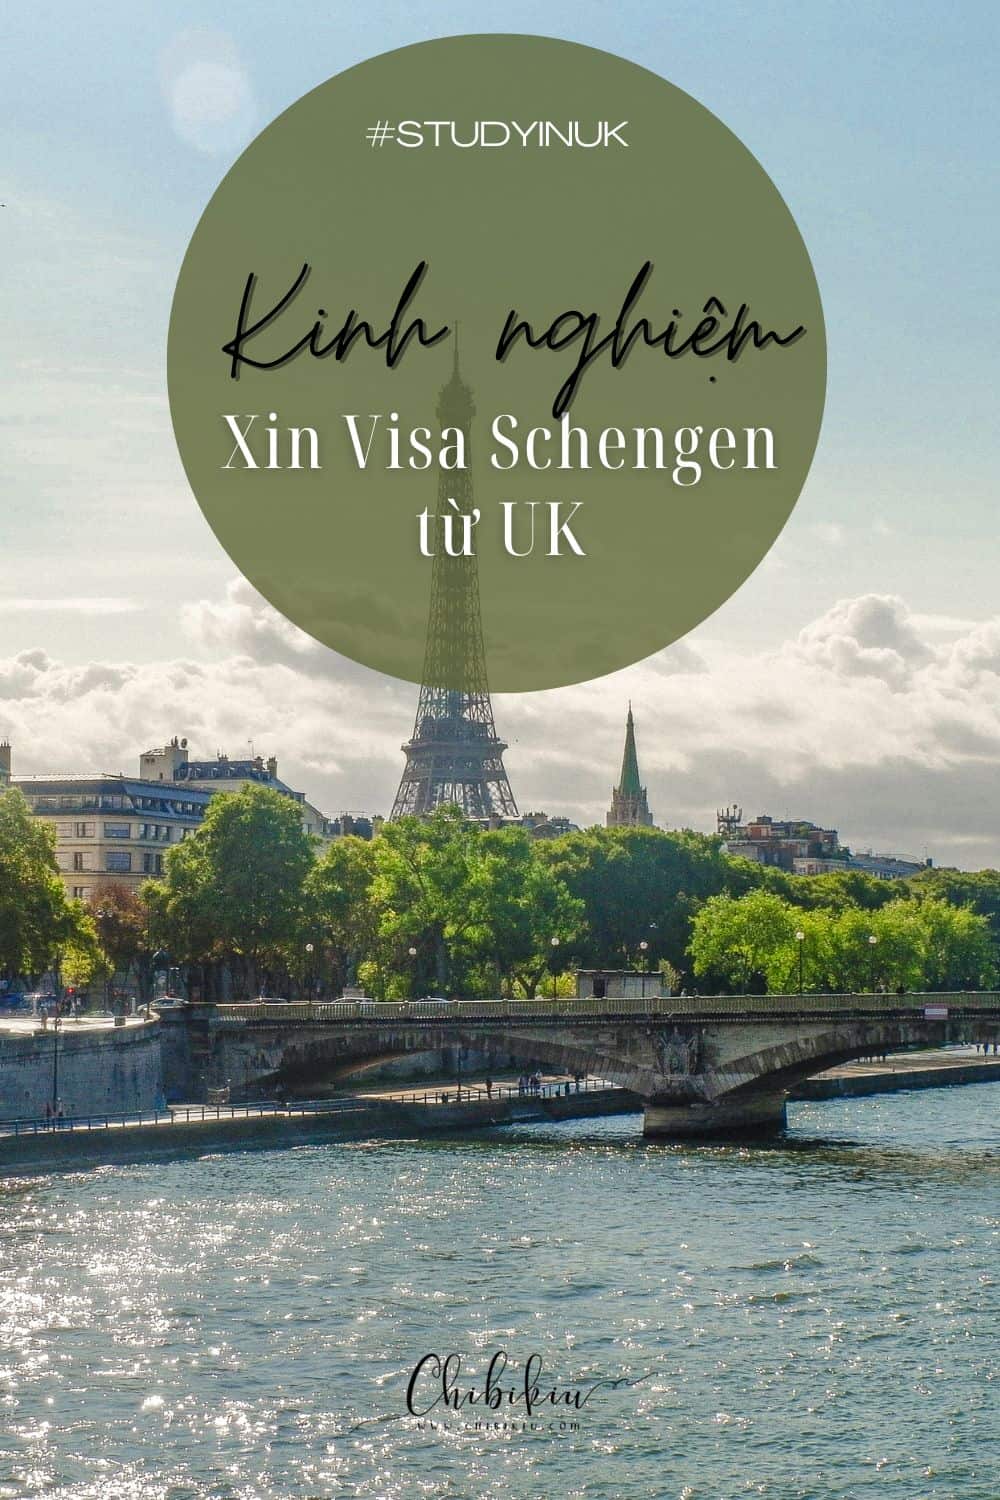 kinh nghiệm xin visa schengen từ uk